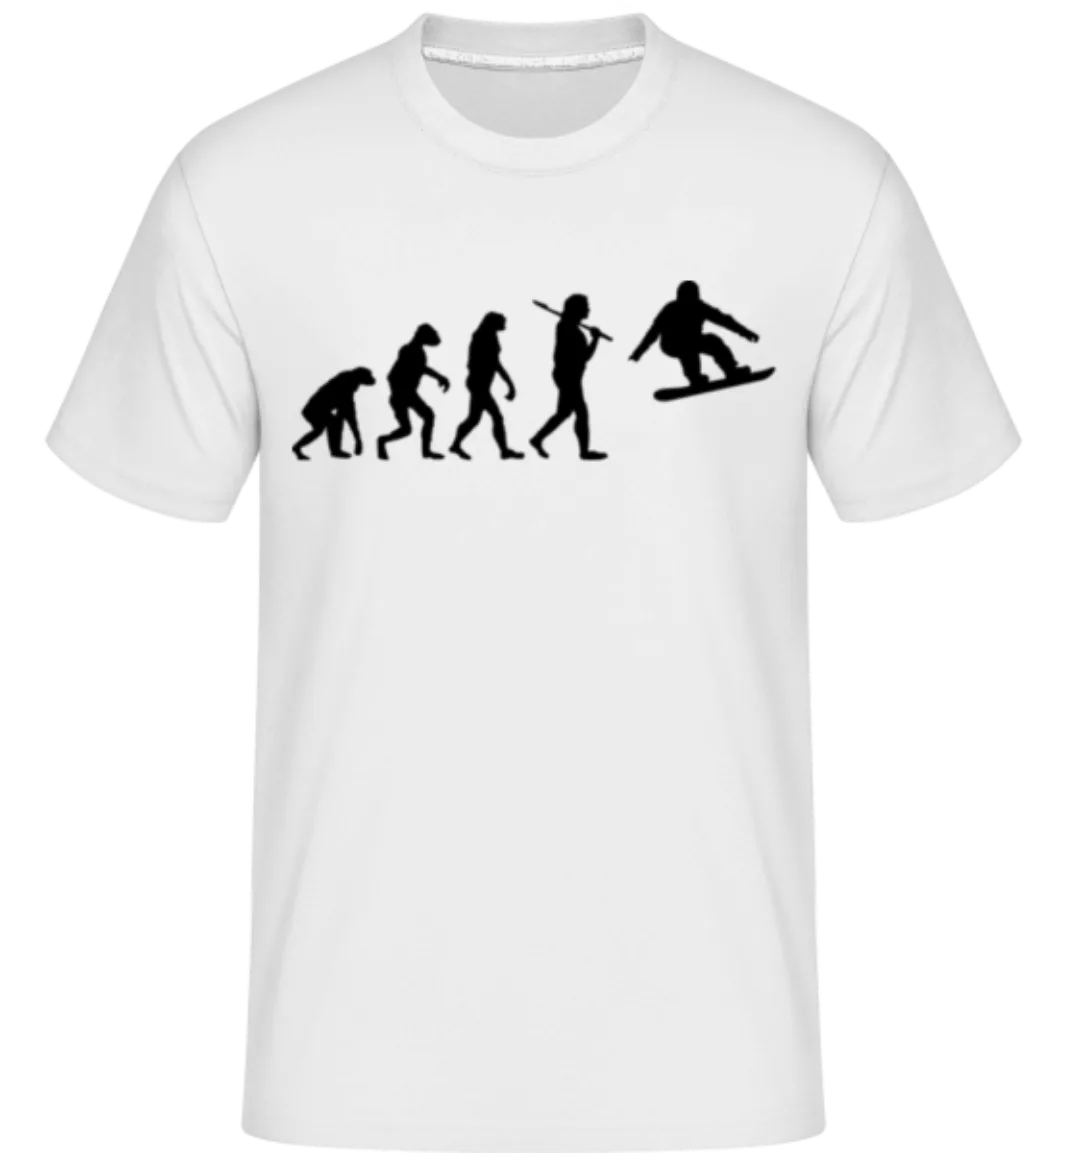 Evolution Of Snowboarding · Shirtinator Männer T-Shirt günstig online kaufen